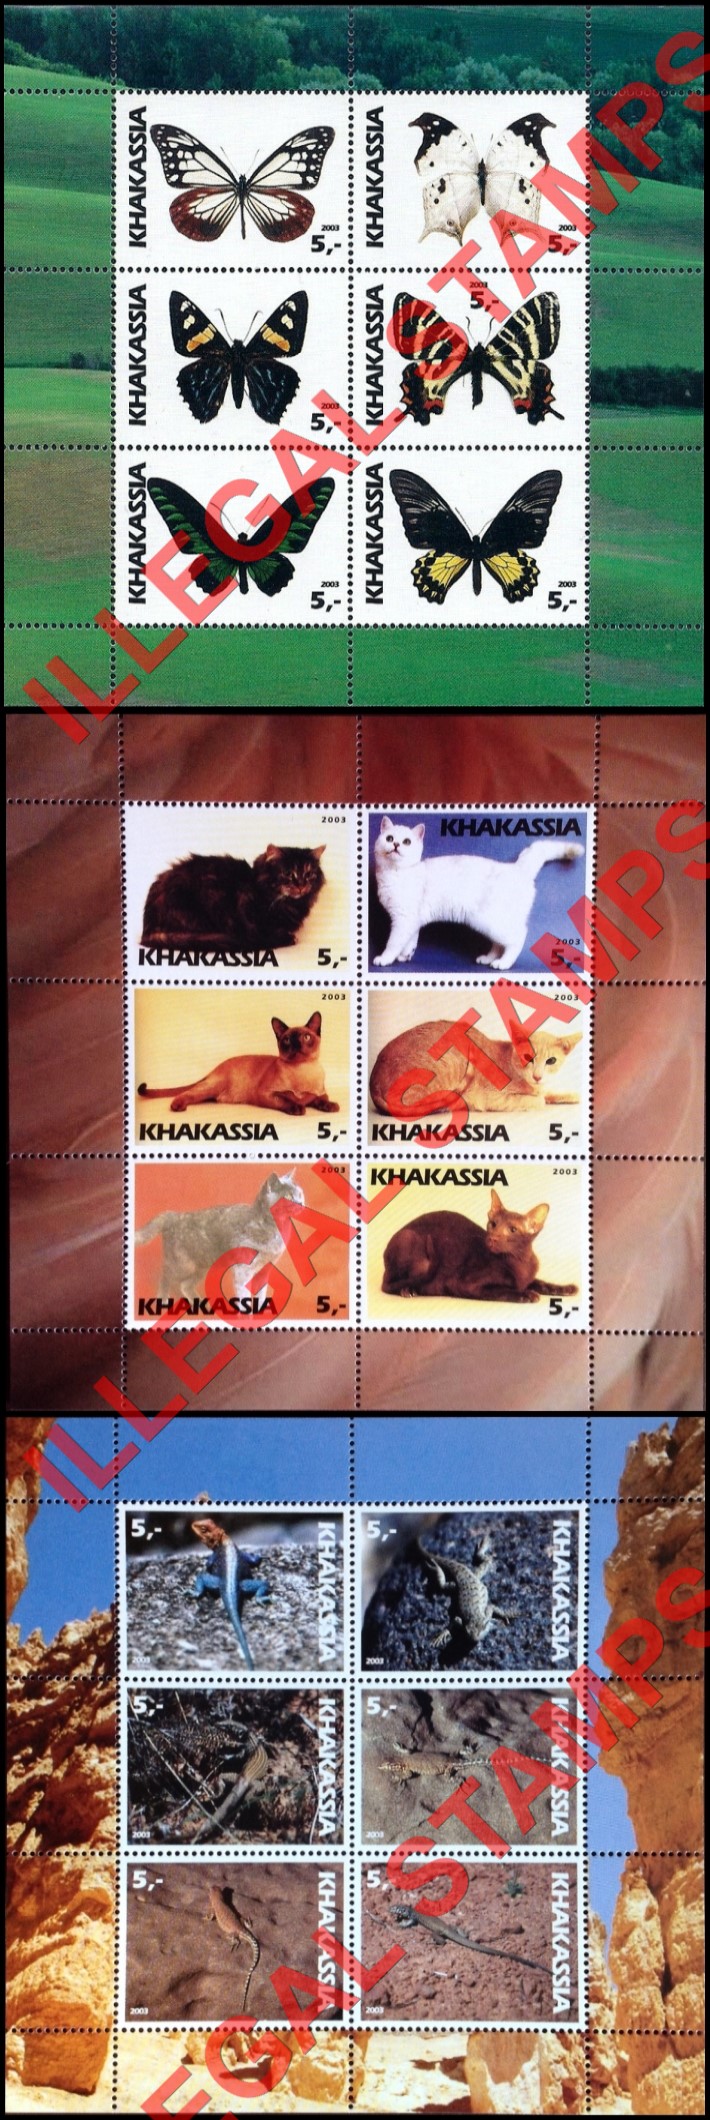 Republic of Khakasia 2003 Illegal Stamps (Part 1)